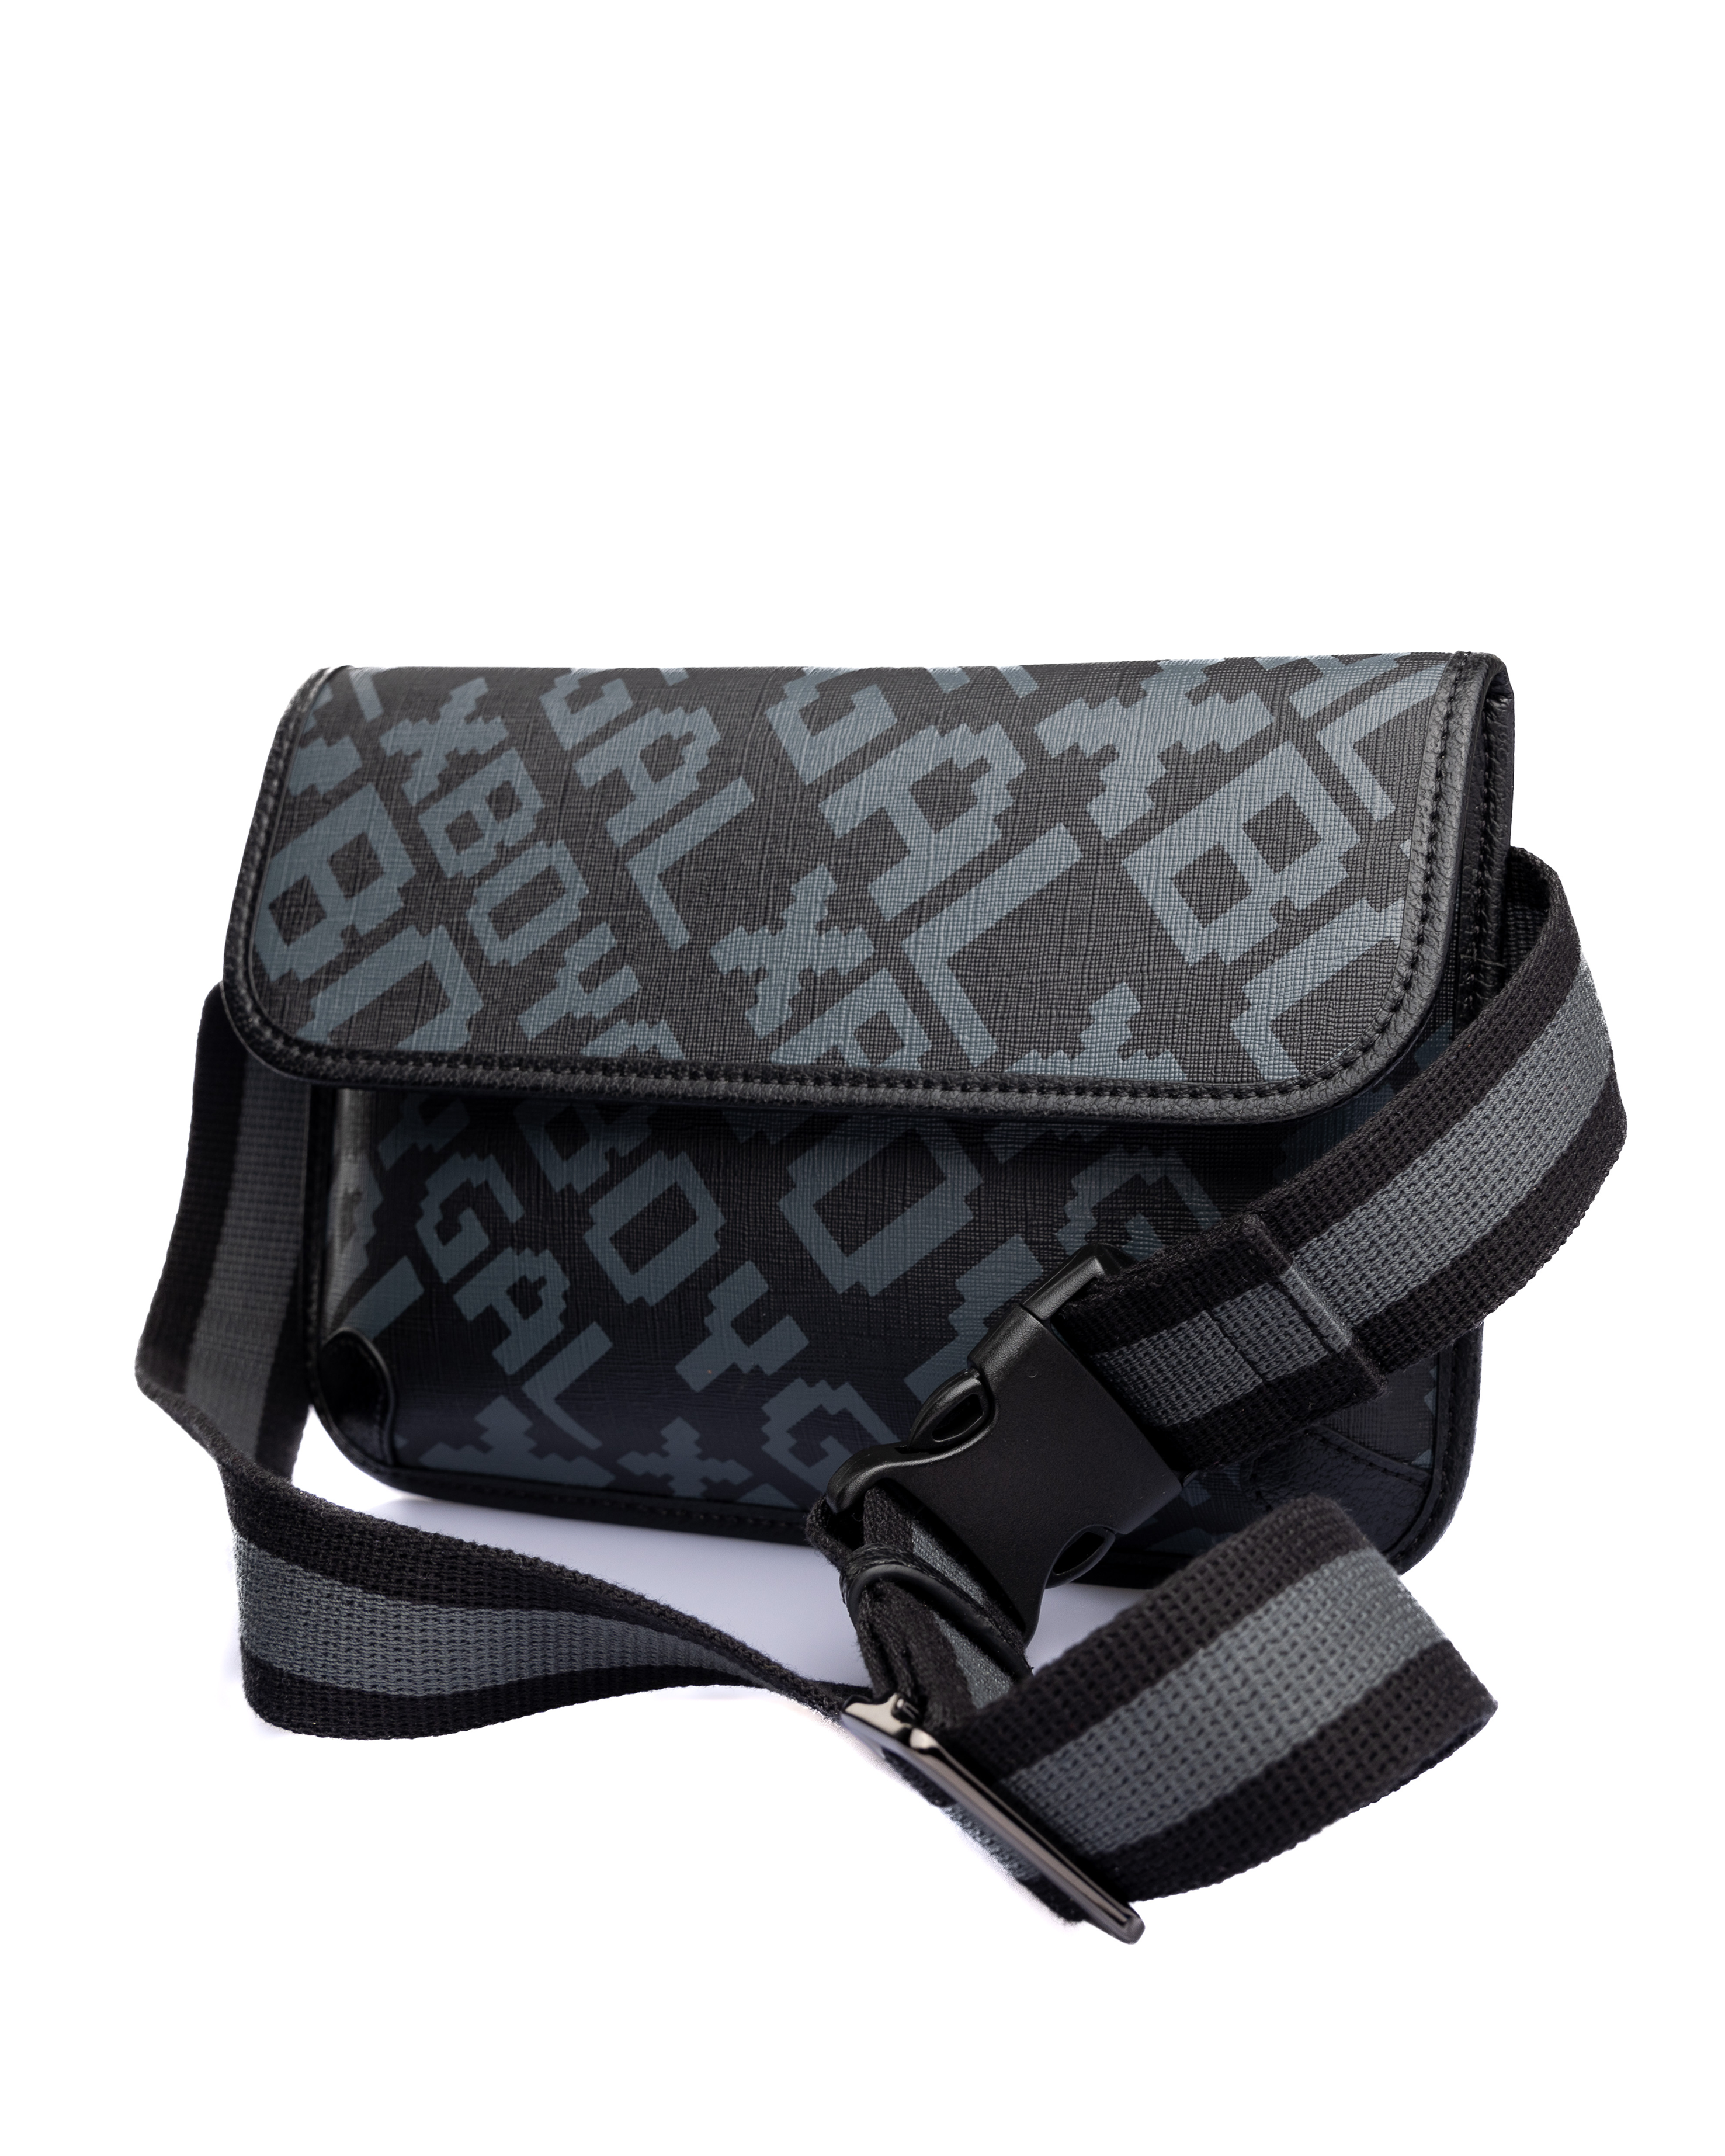 SHIH Stephanie Lin Heavy Black Leather Shoulder Purse Bag Muti Pocket | eBay